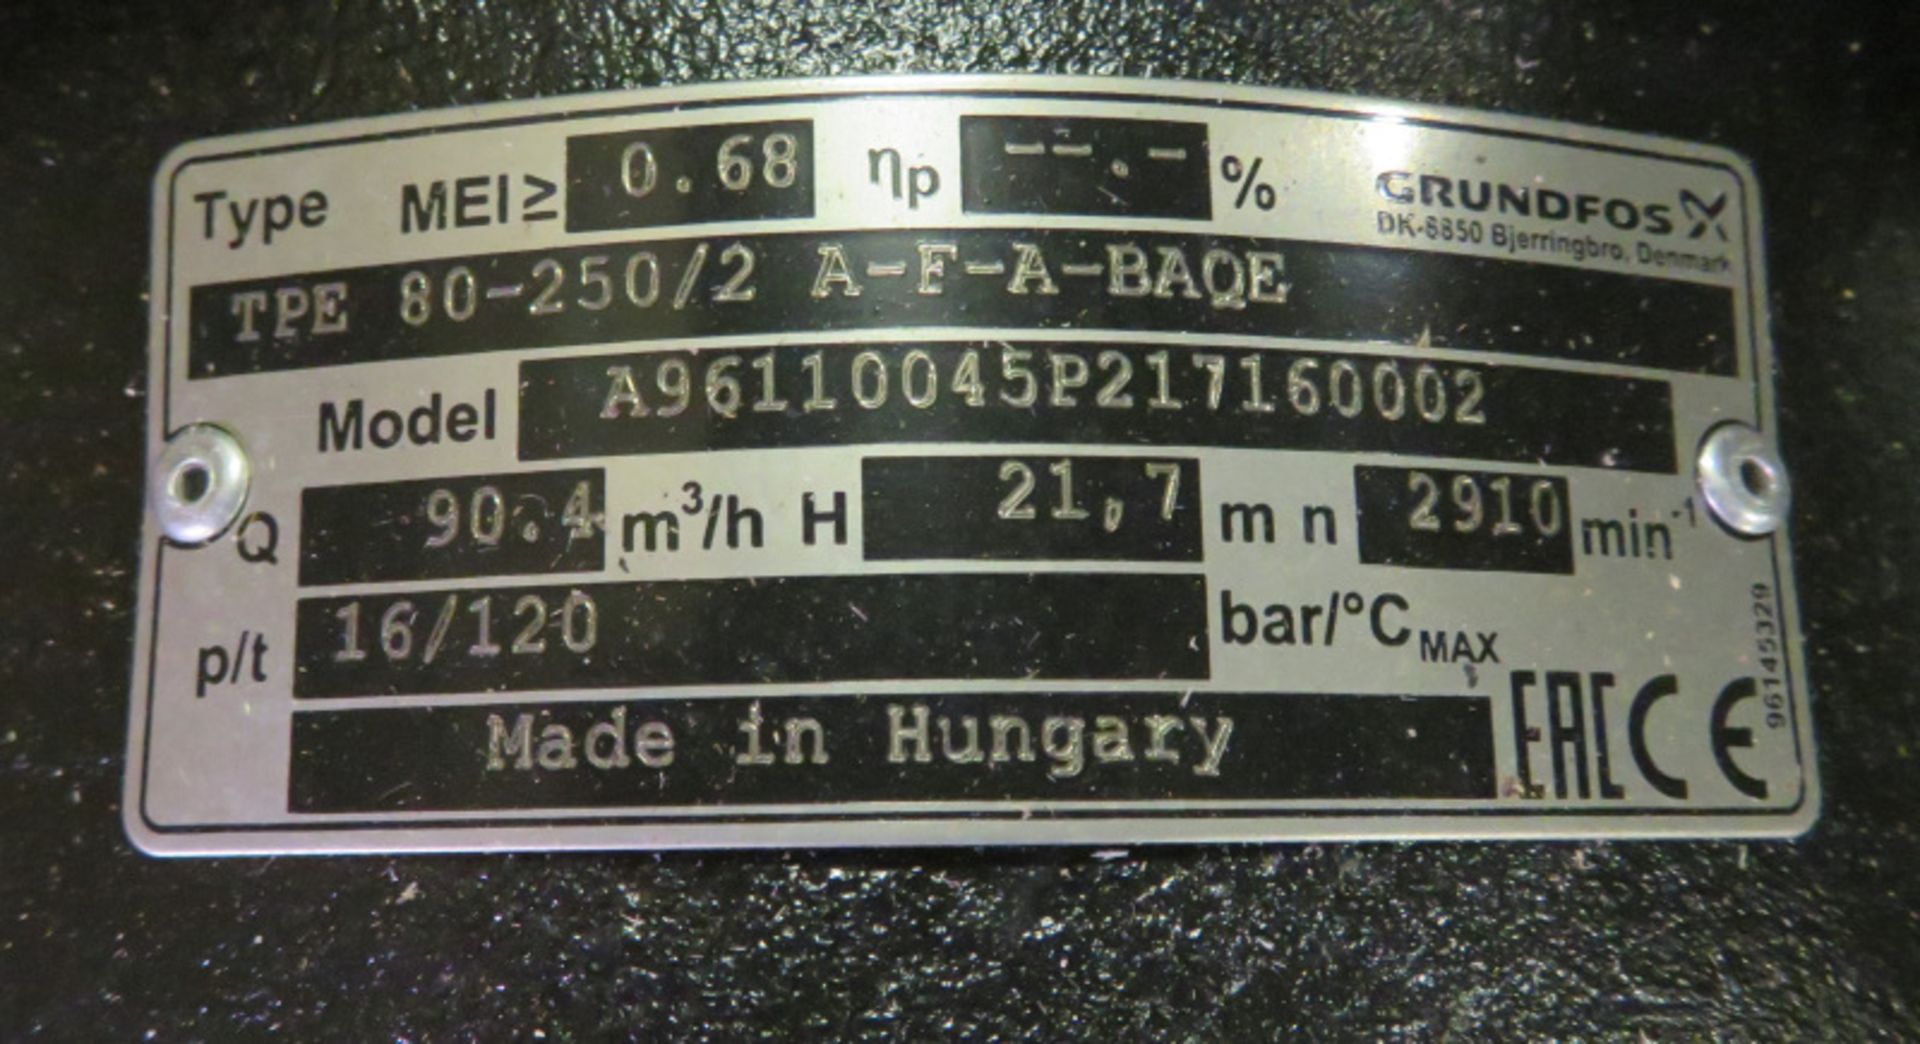 Grundfos MEI-0.68 Heating Pump Unit - Image 3 of 3